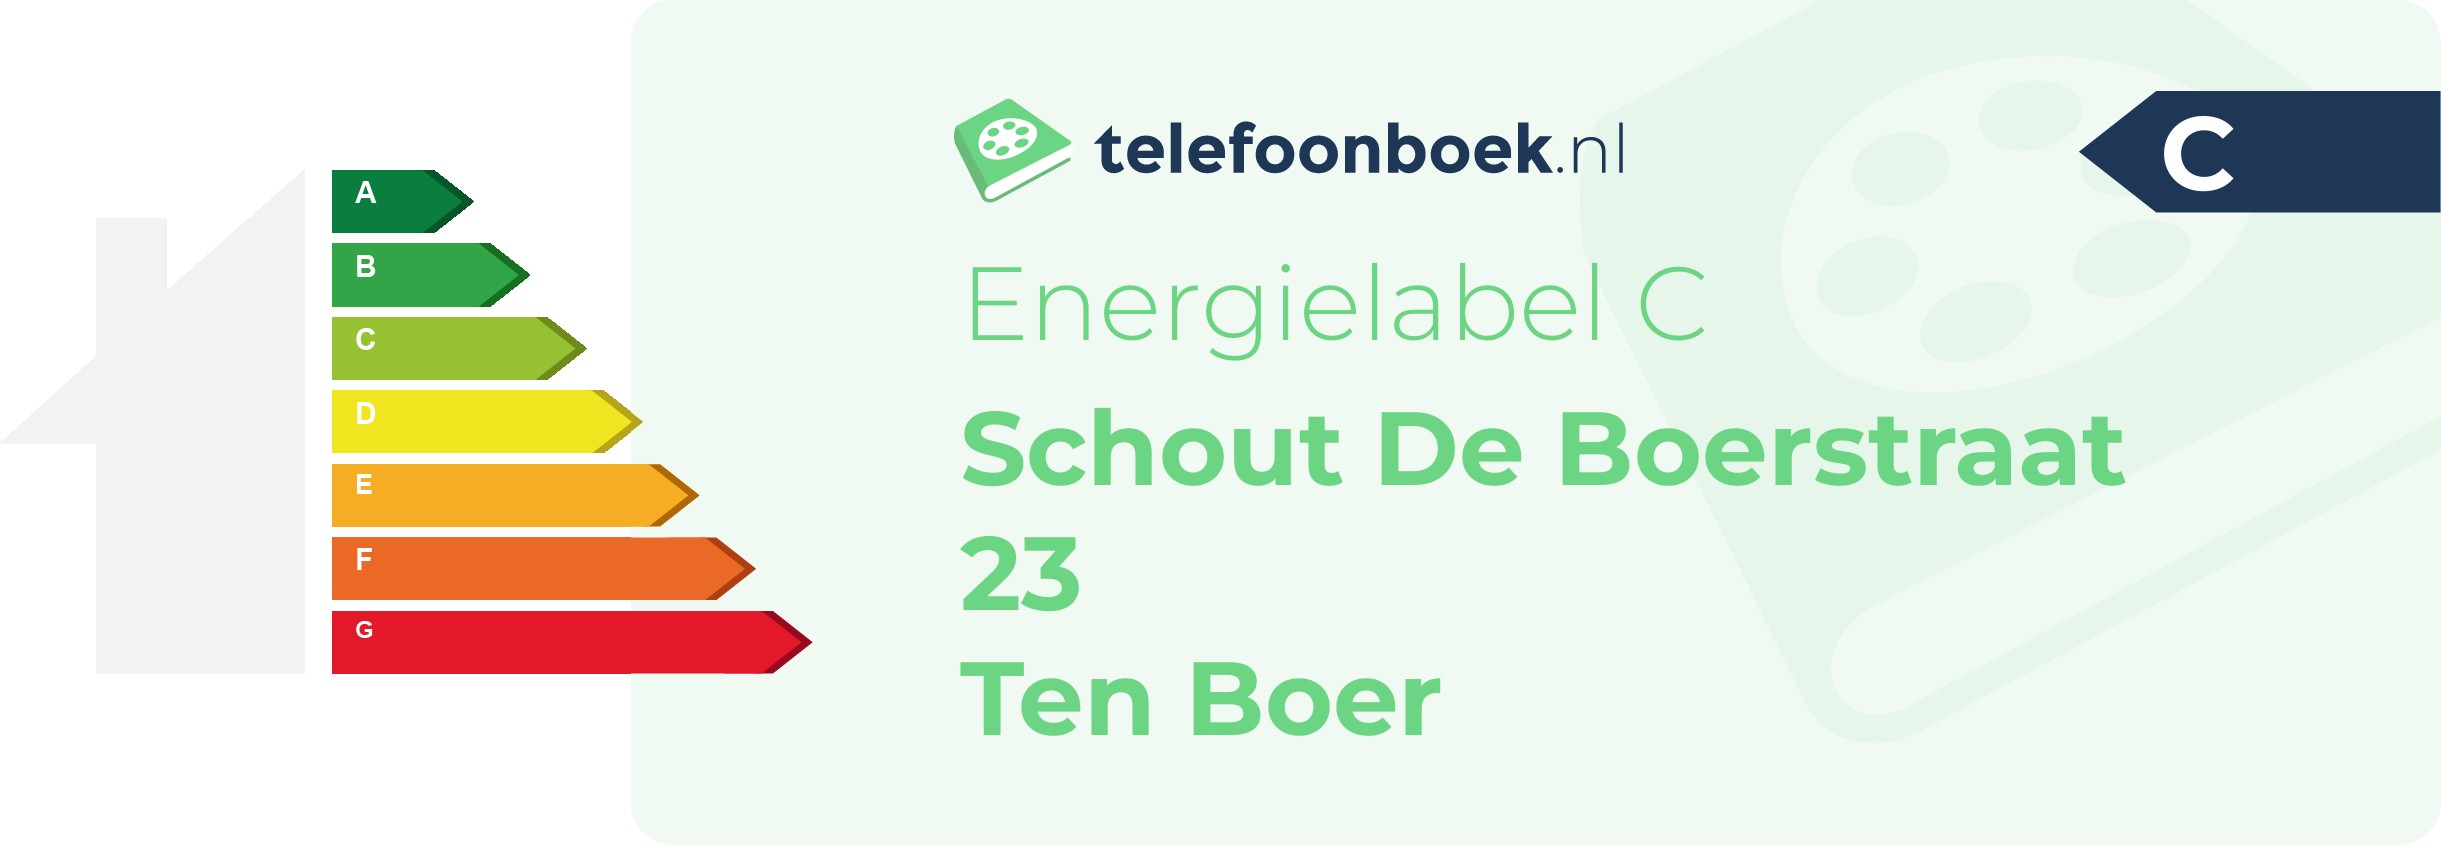 Energielabel Schout De Boerstraat 23 Ten Boer